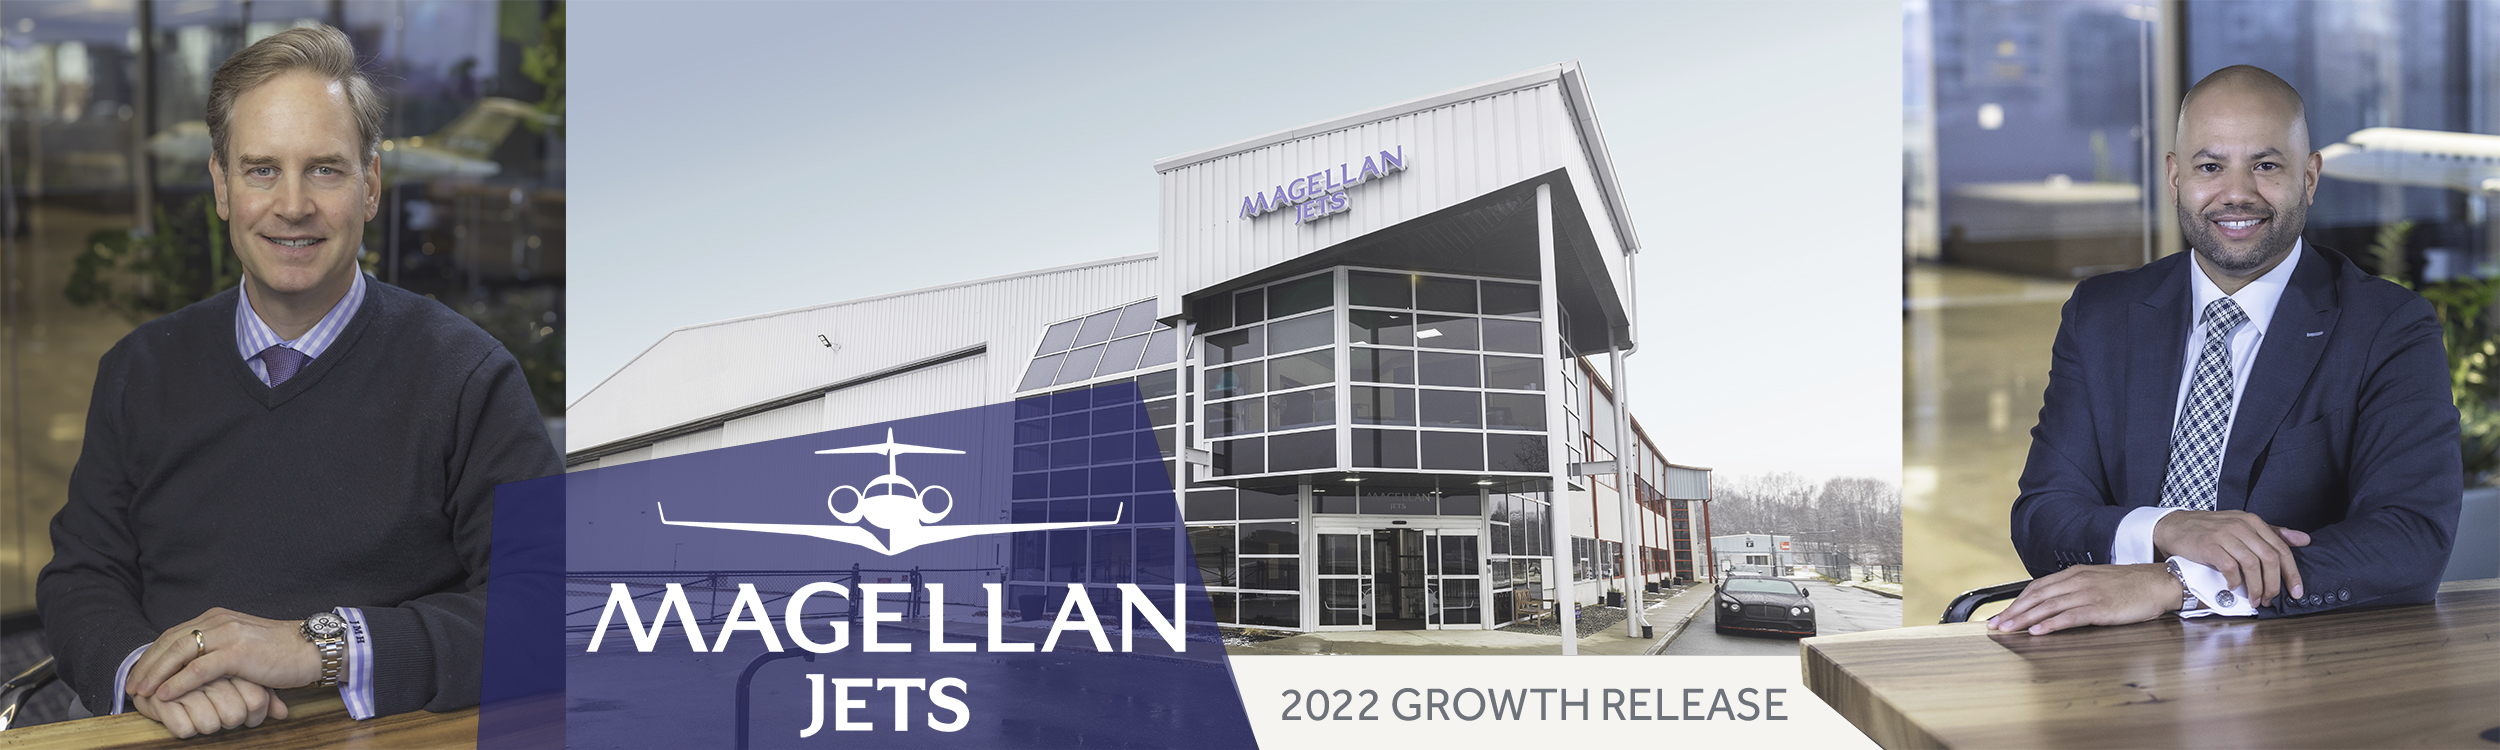 Magellan Jets 2022 Growth Release banner